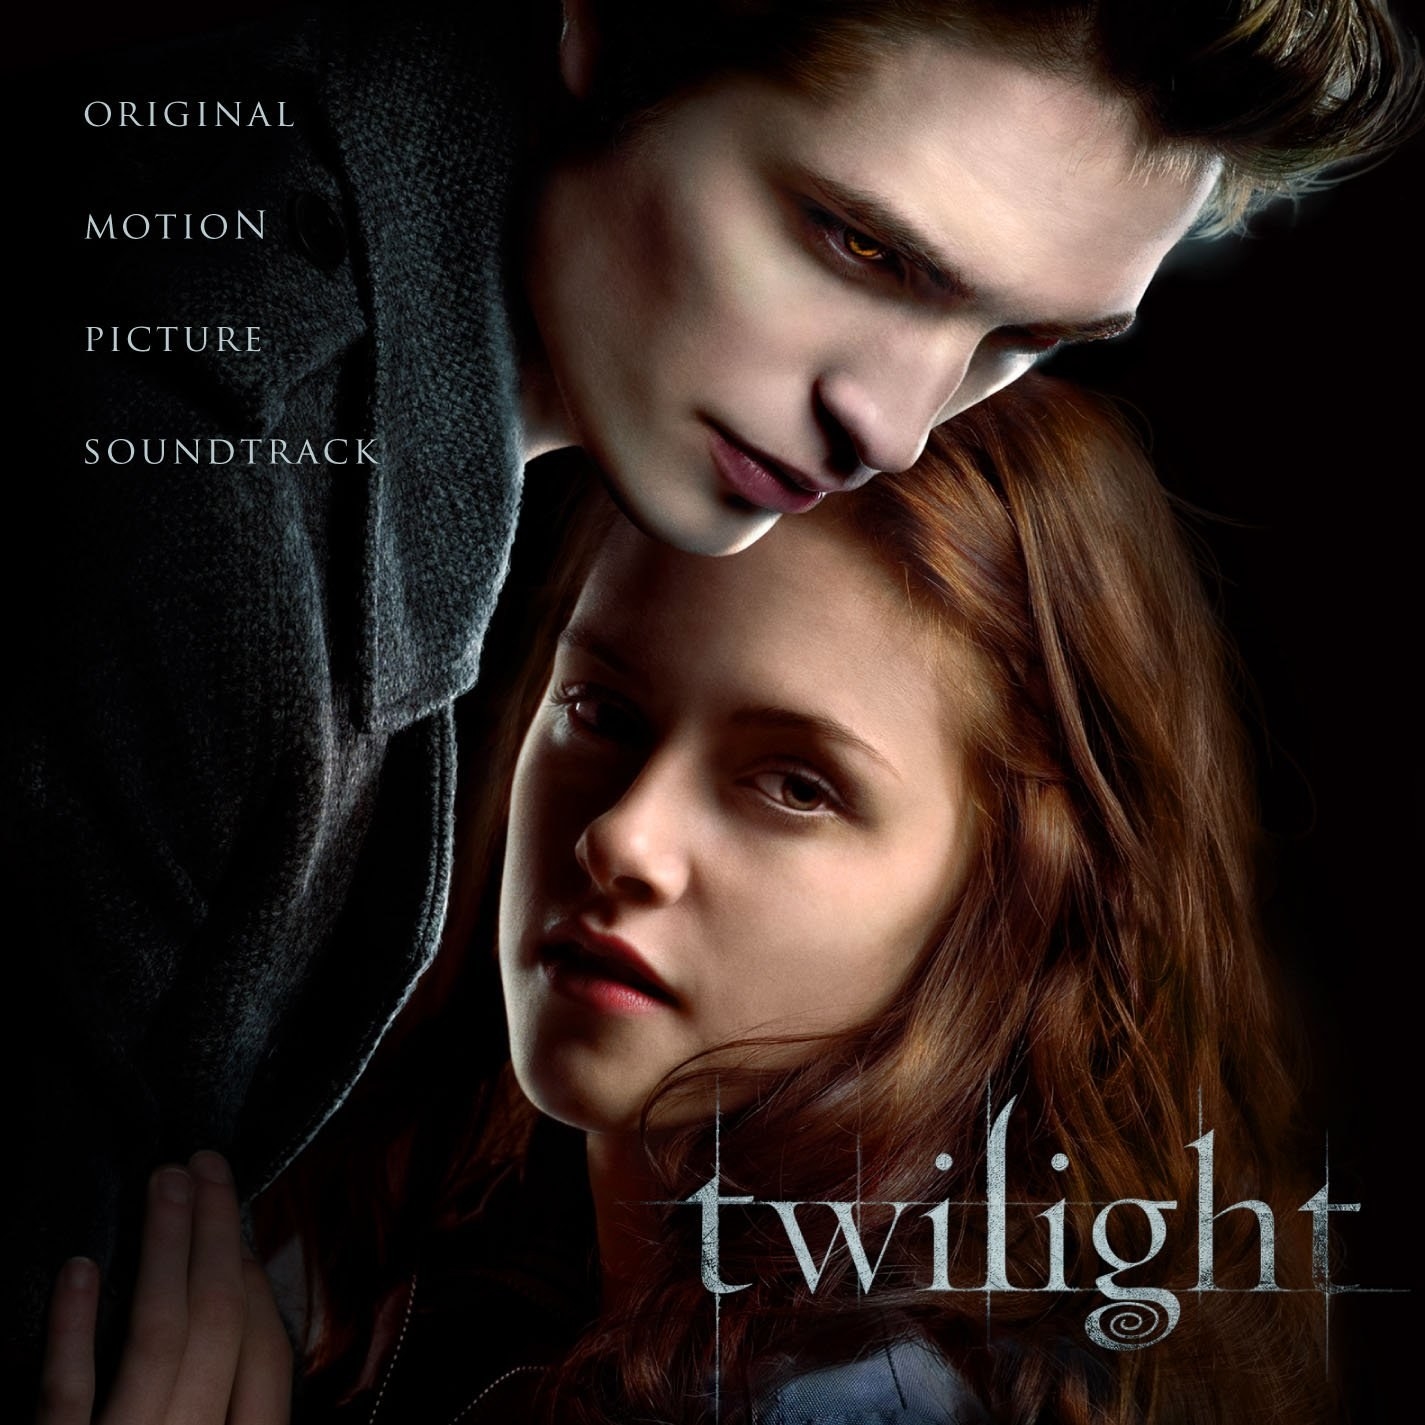 The album cover for Twilight